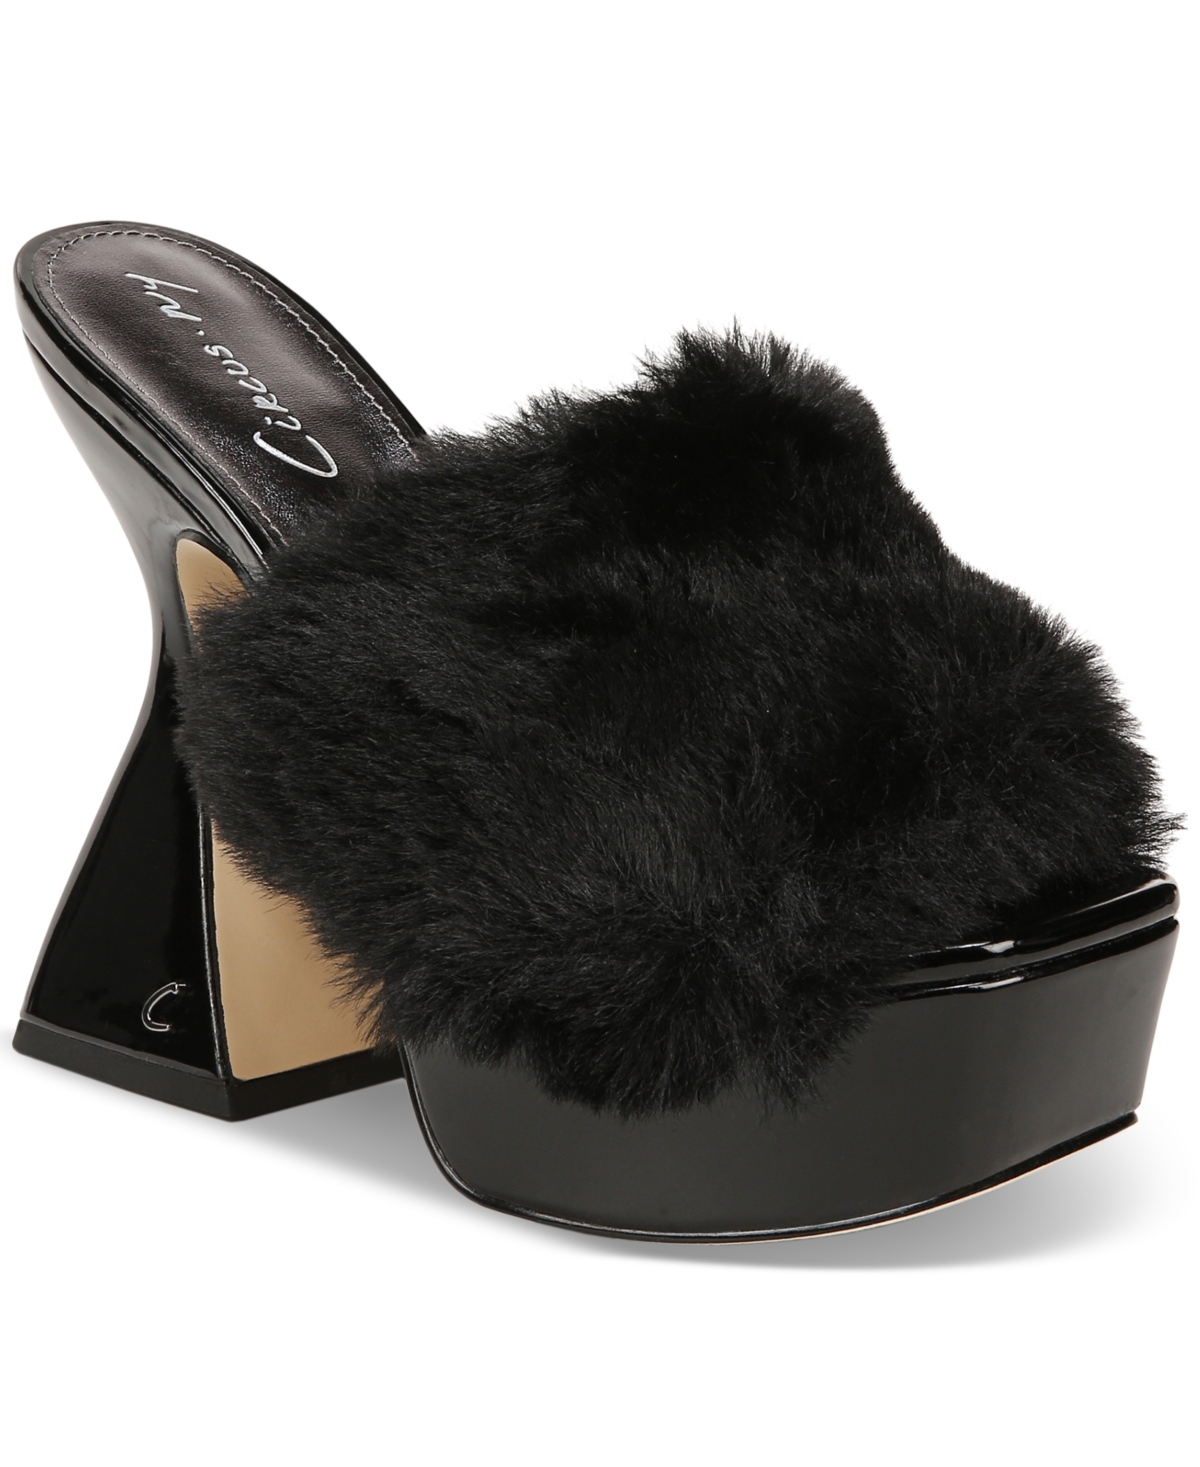 Women's Abigal Slip-On Furry Platform Dress Sandals - Black Patent